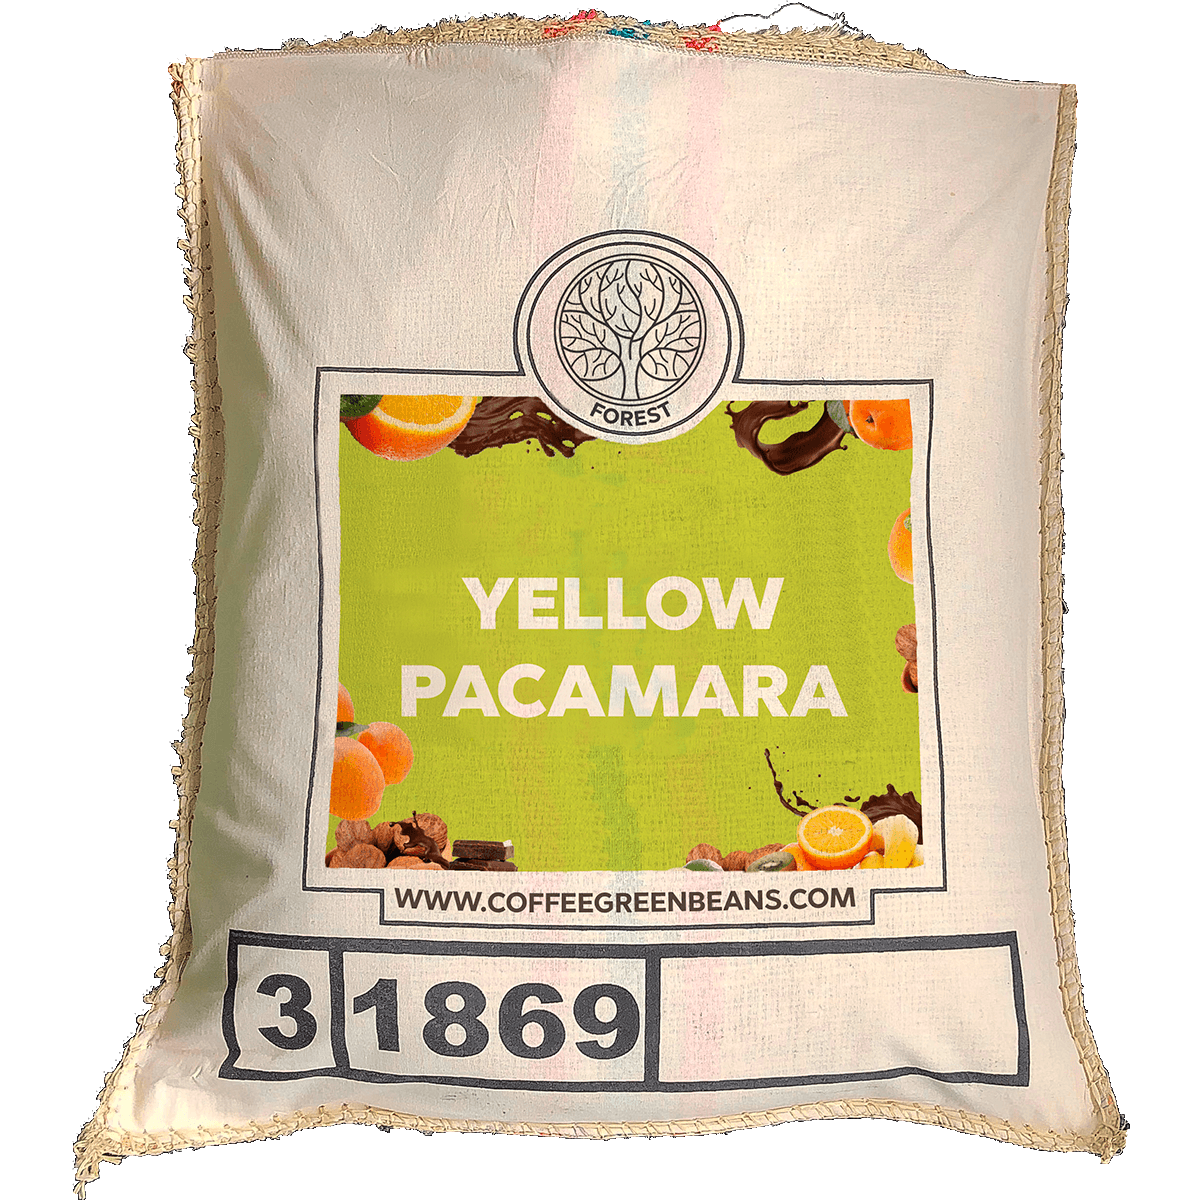 YELLOW PACAMARA - Forest Coffee 